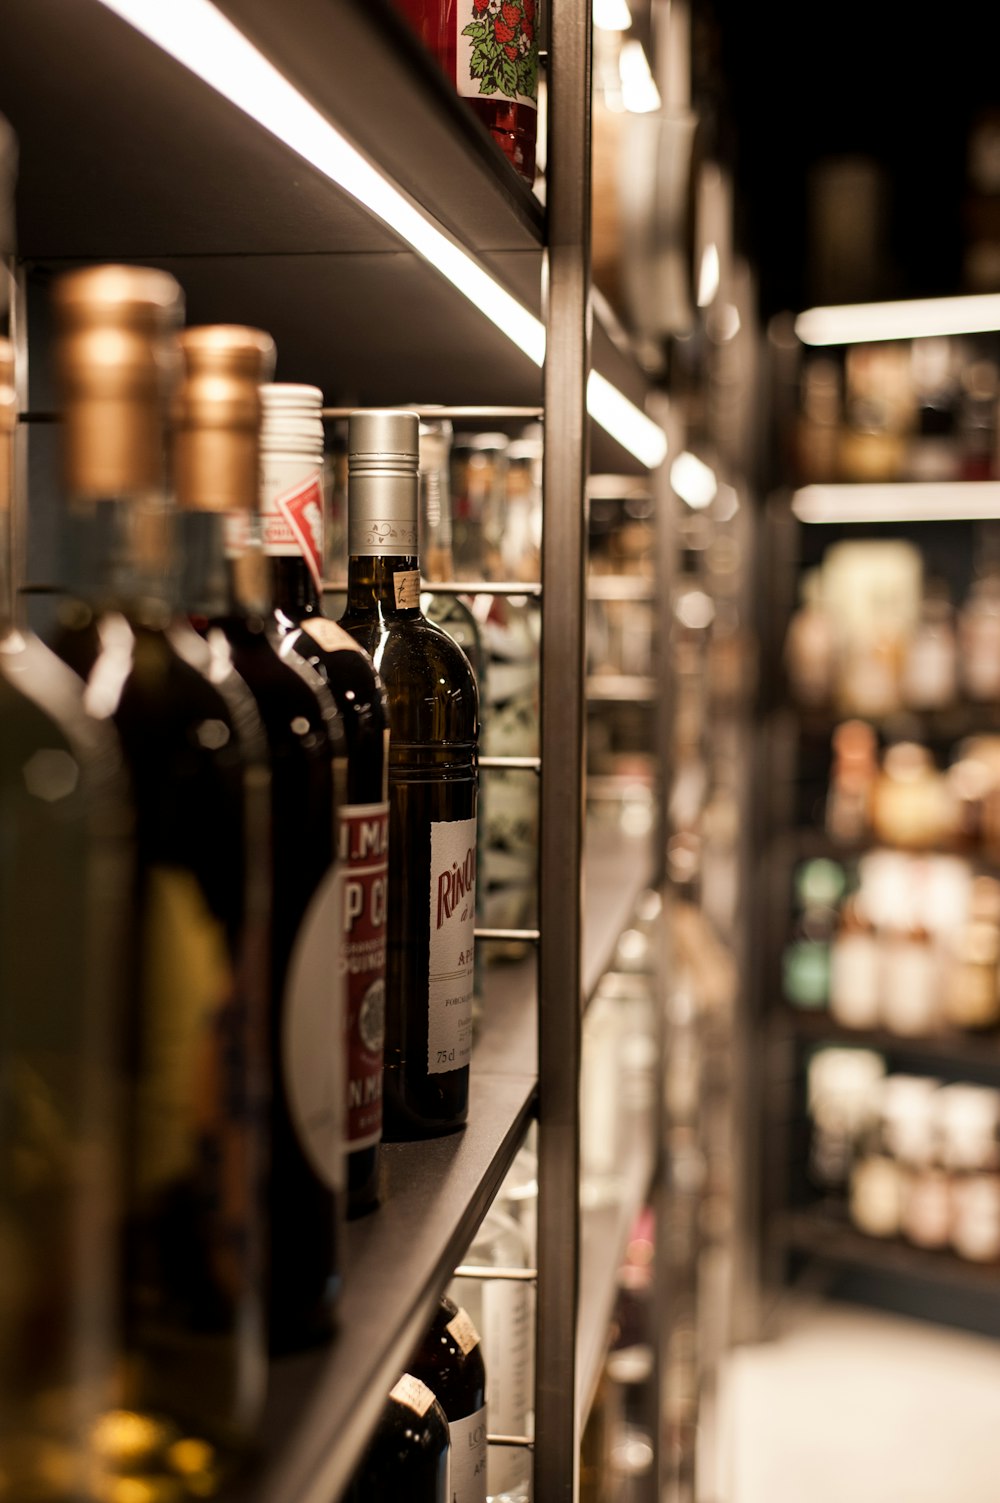 assorted wine bottles display on gray rack